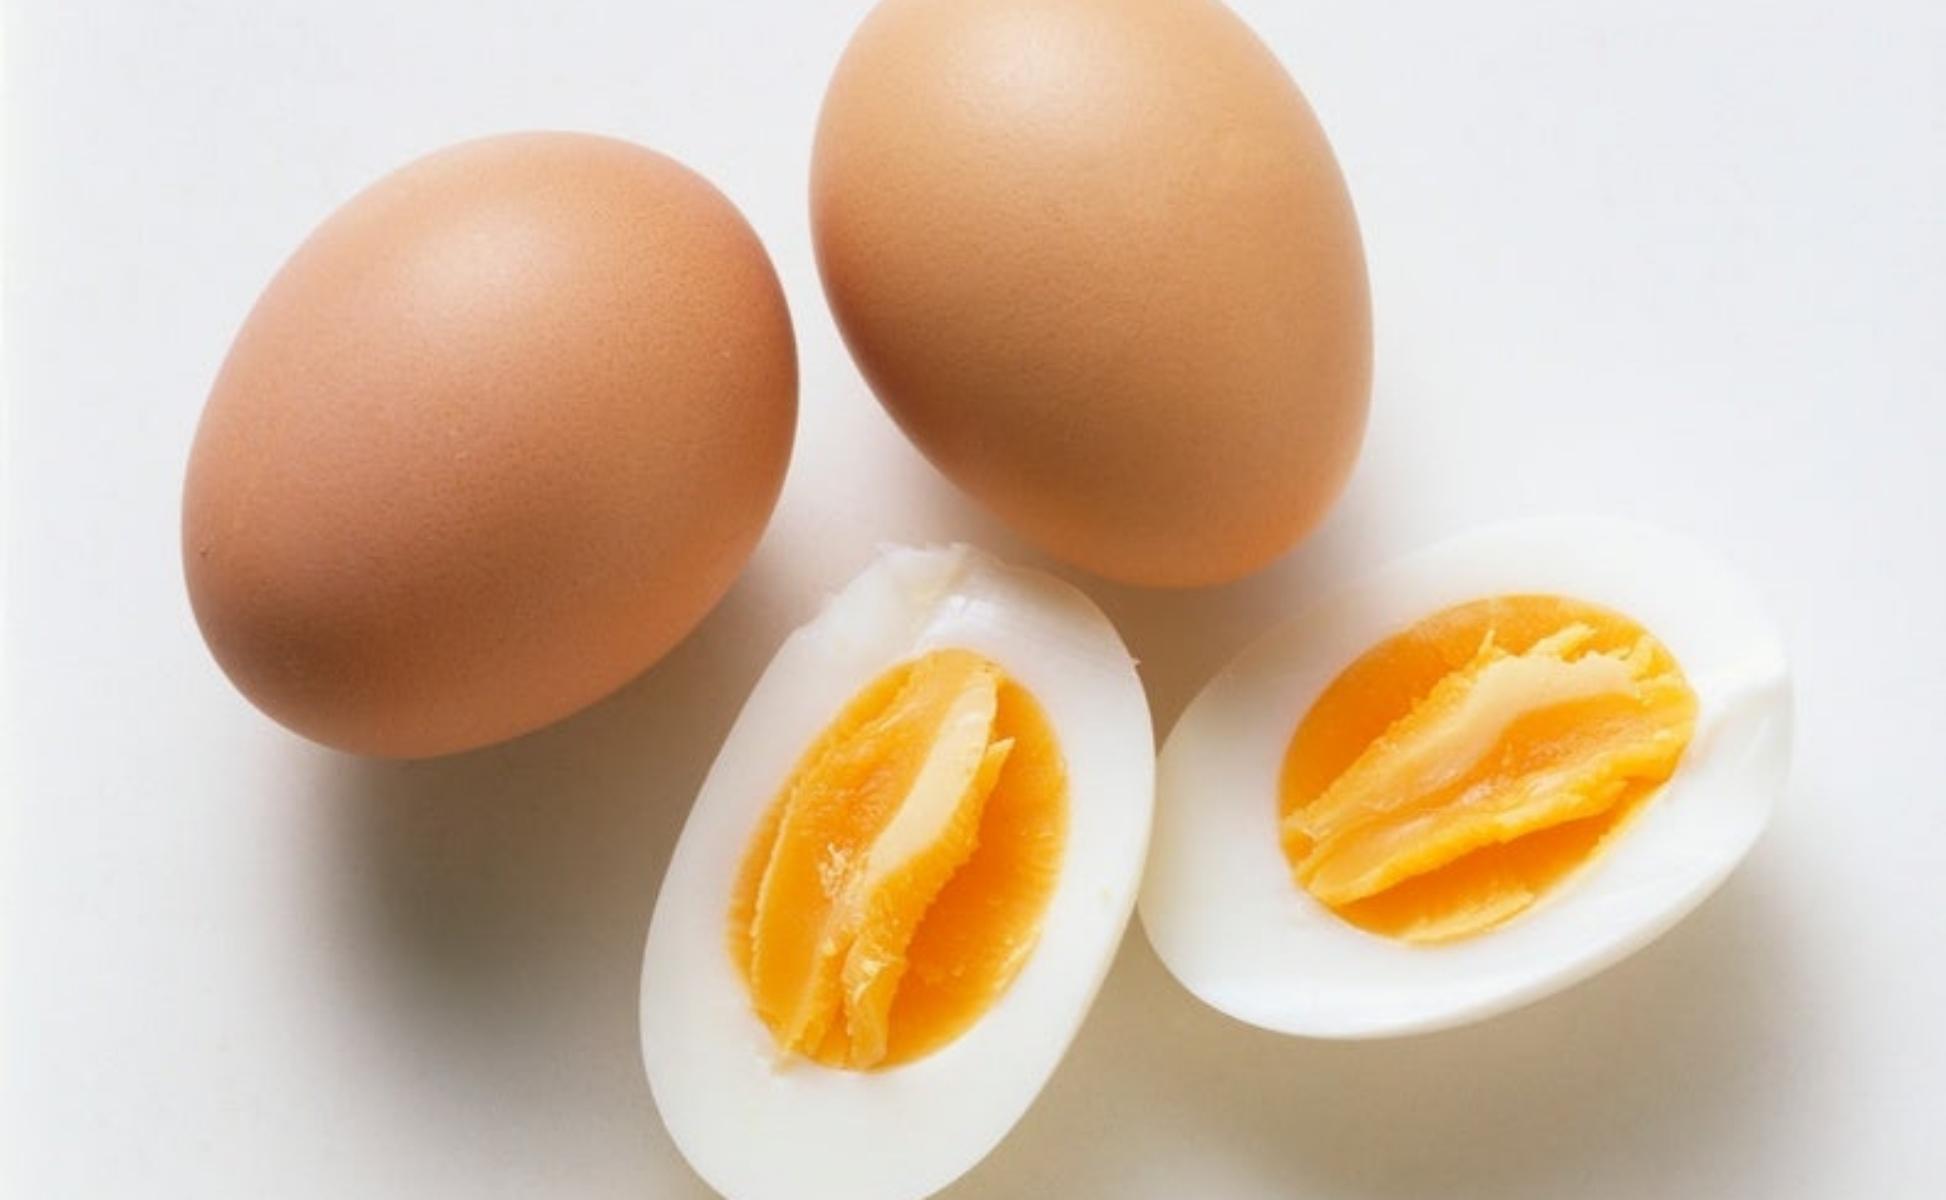 1. Eggs